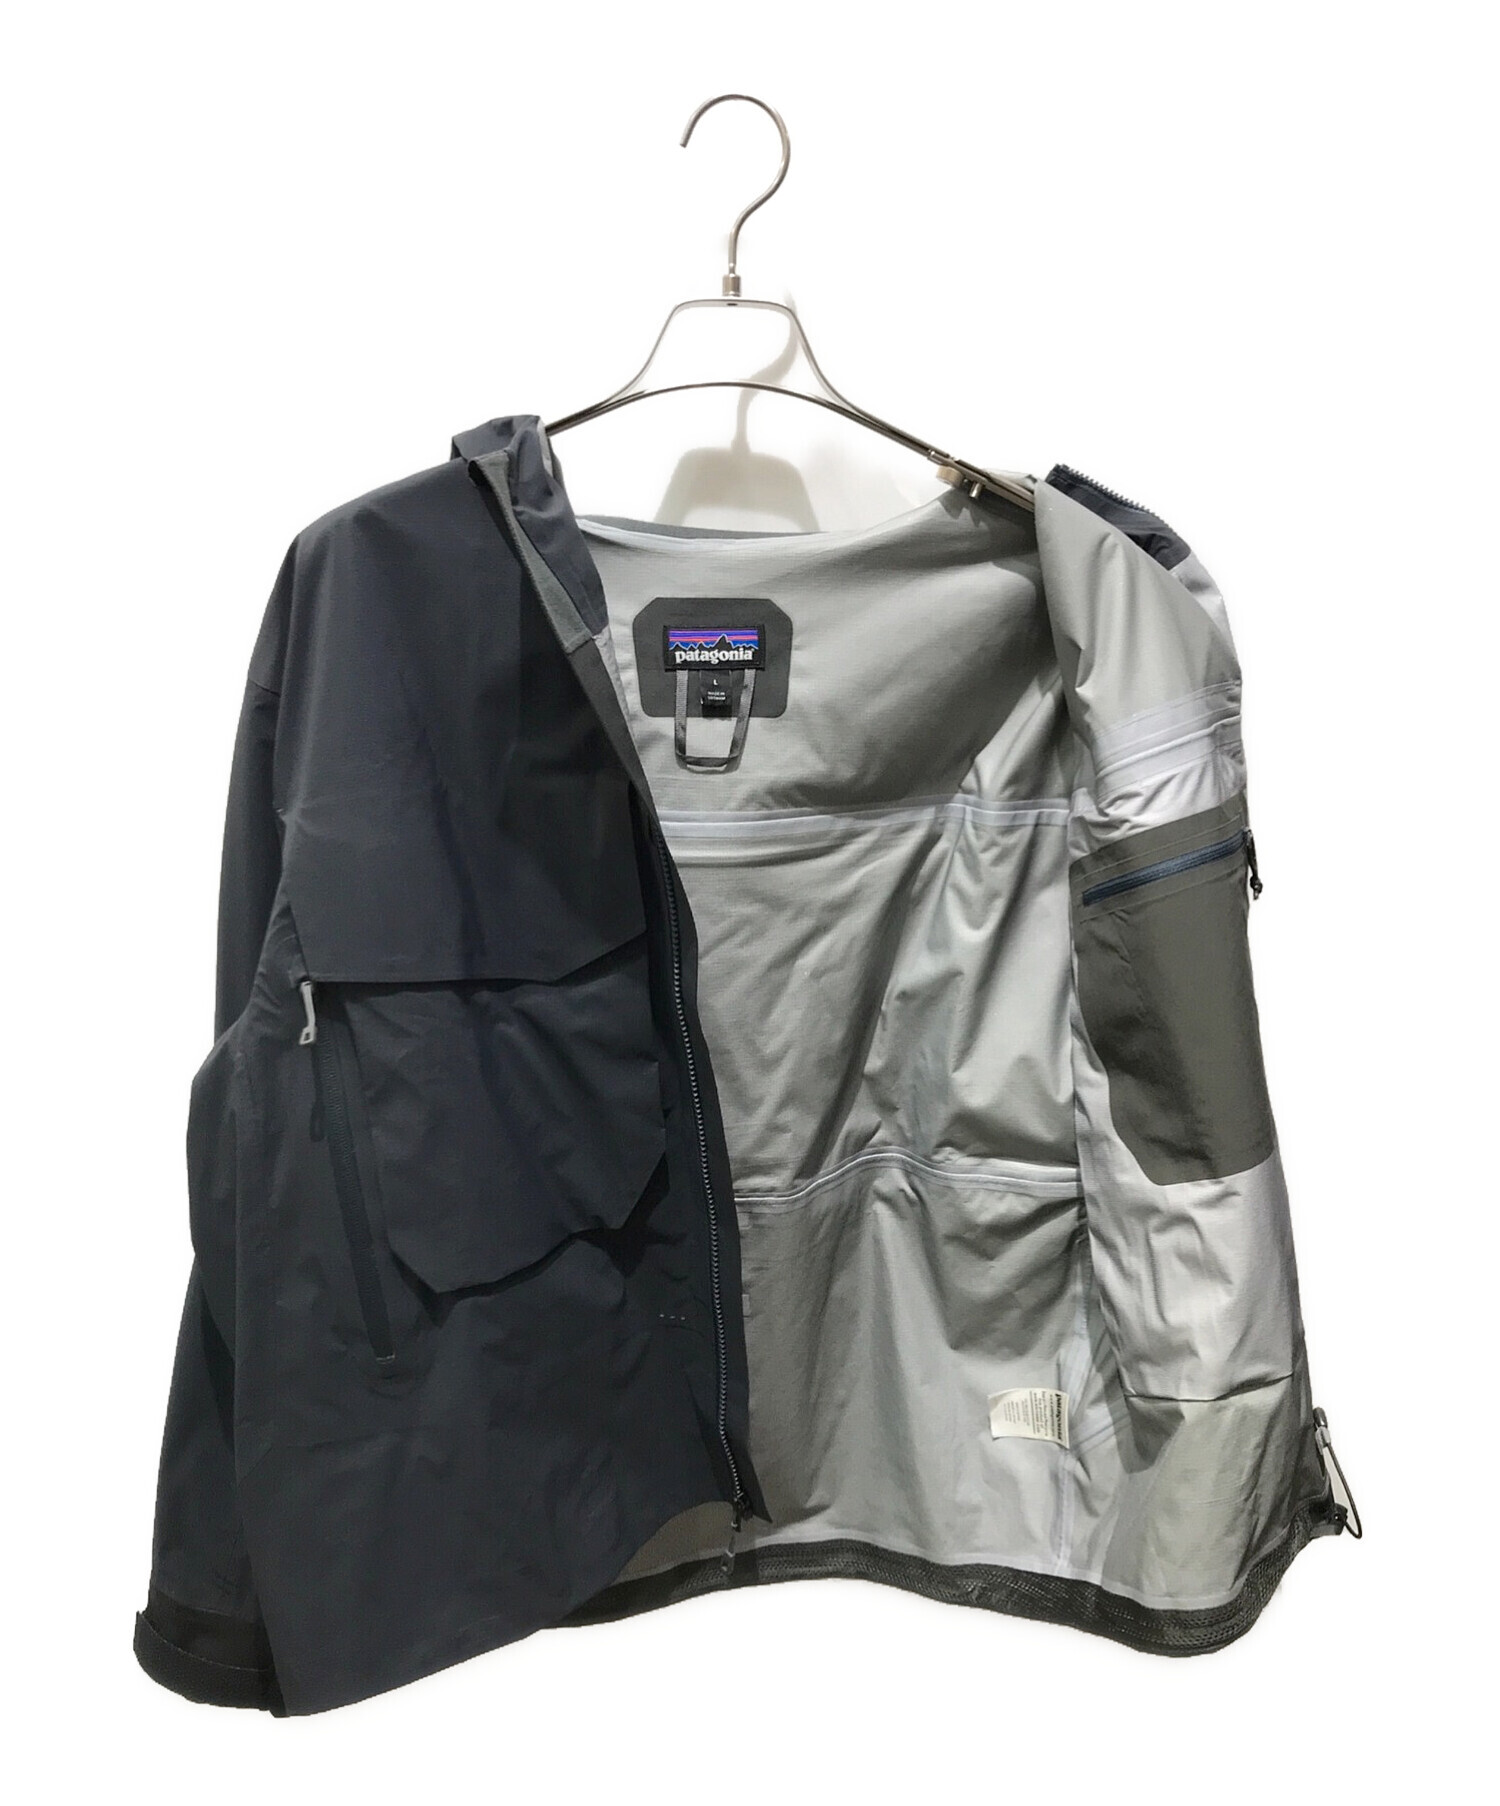 FS - Patagonia SST Jacket - Large